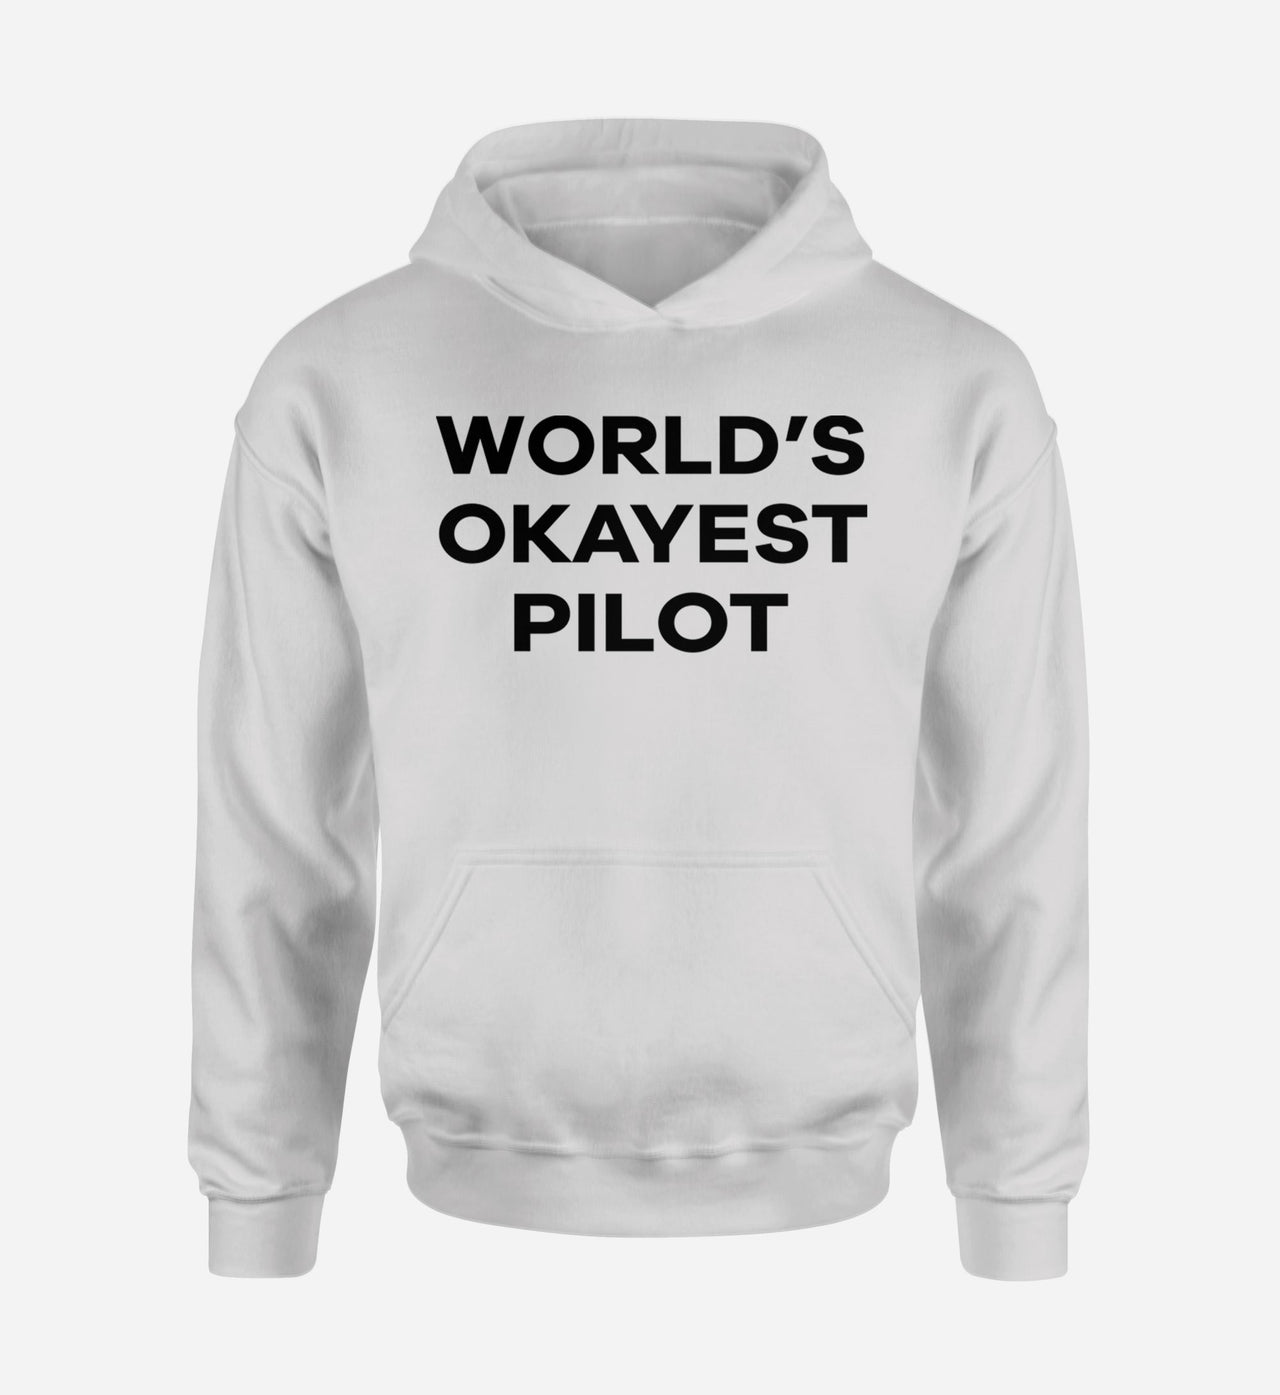 World's Okayest Pilot Designed Hoodies